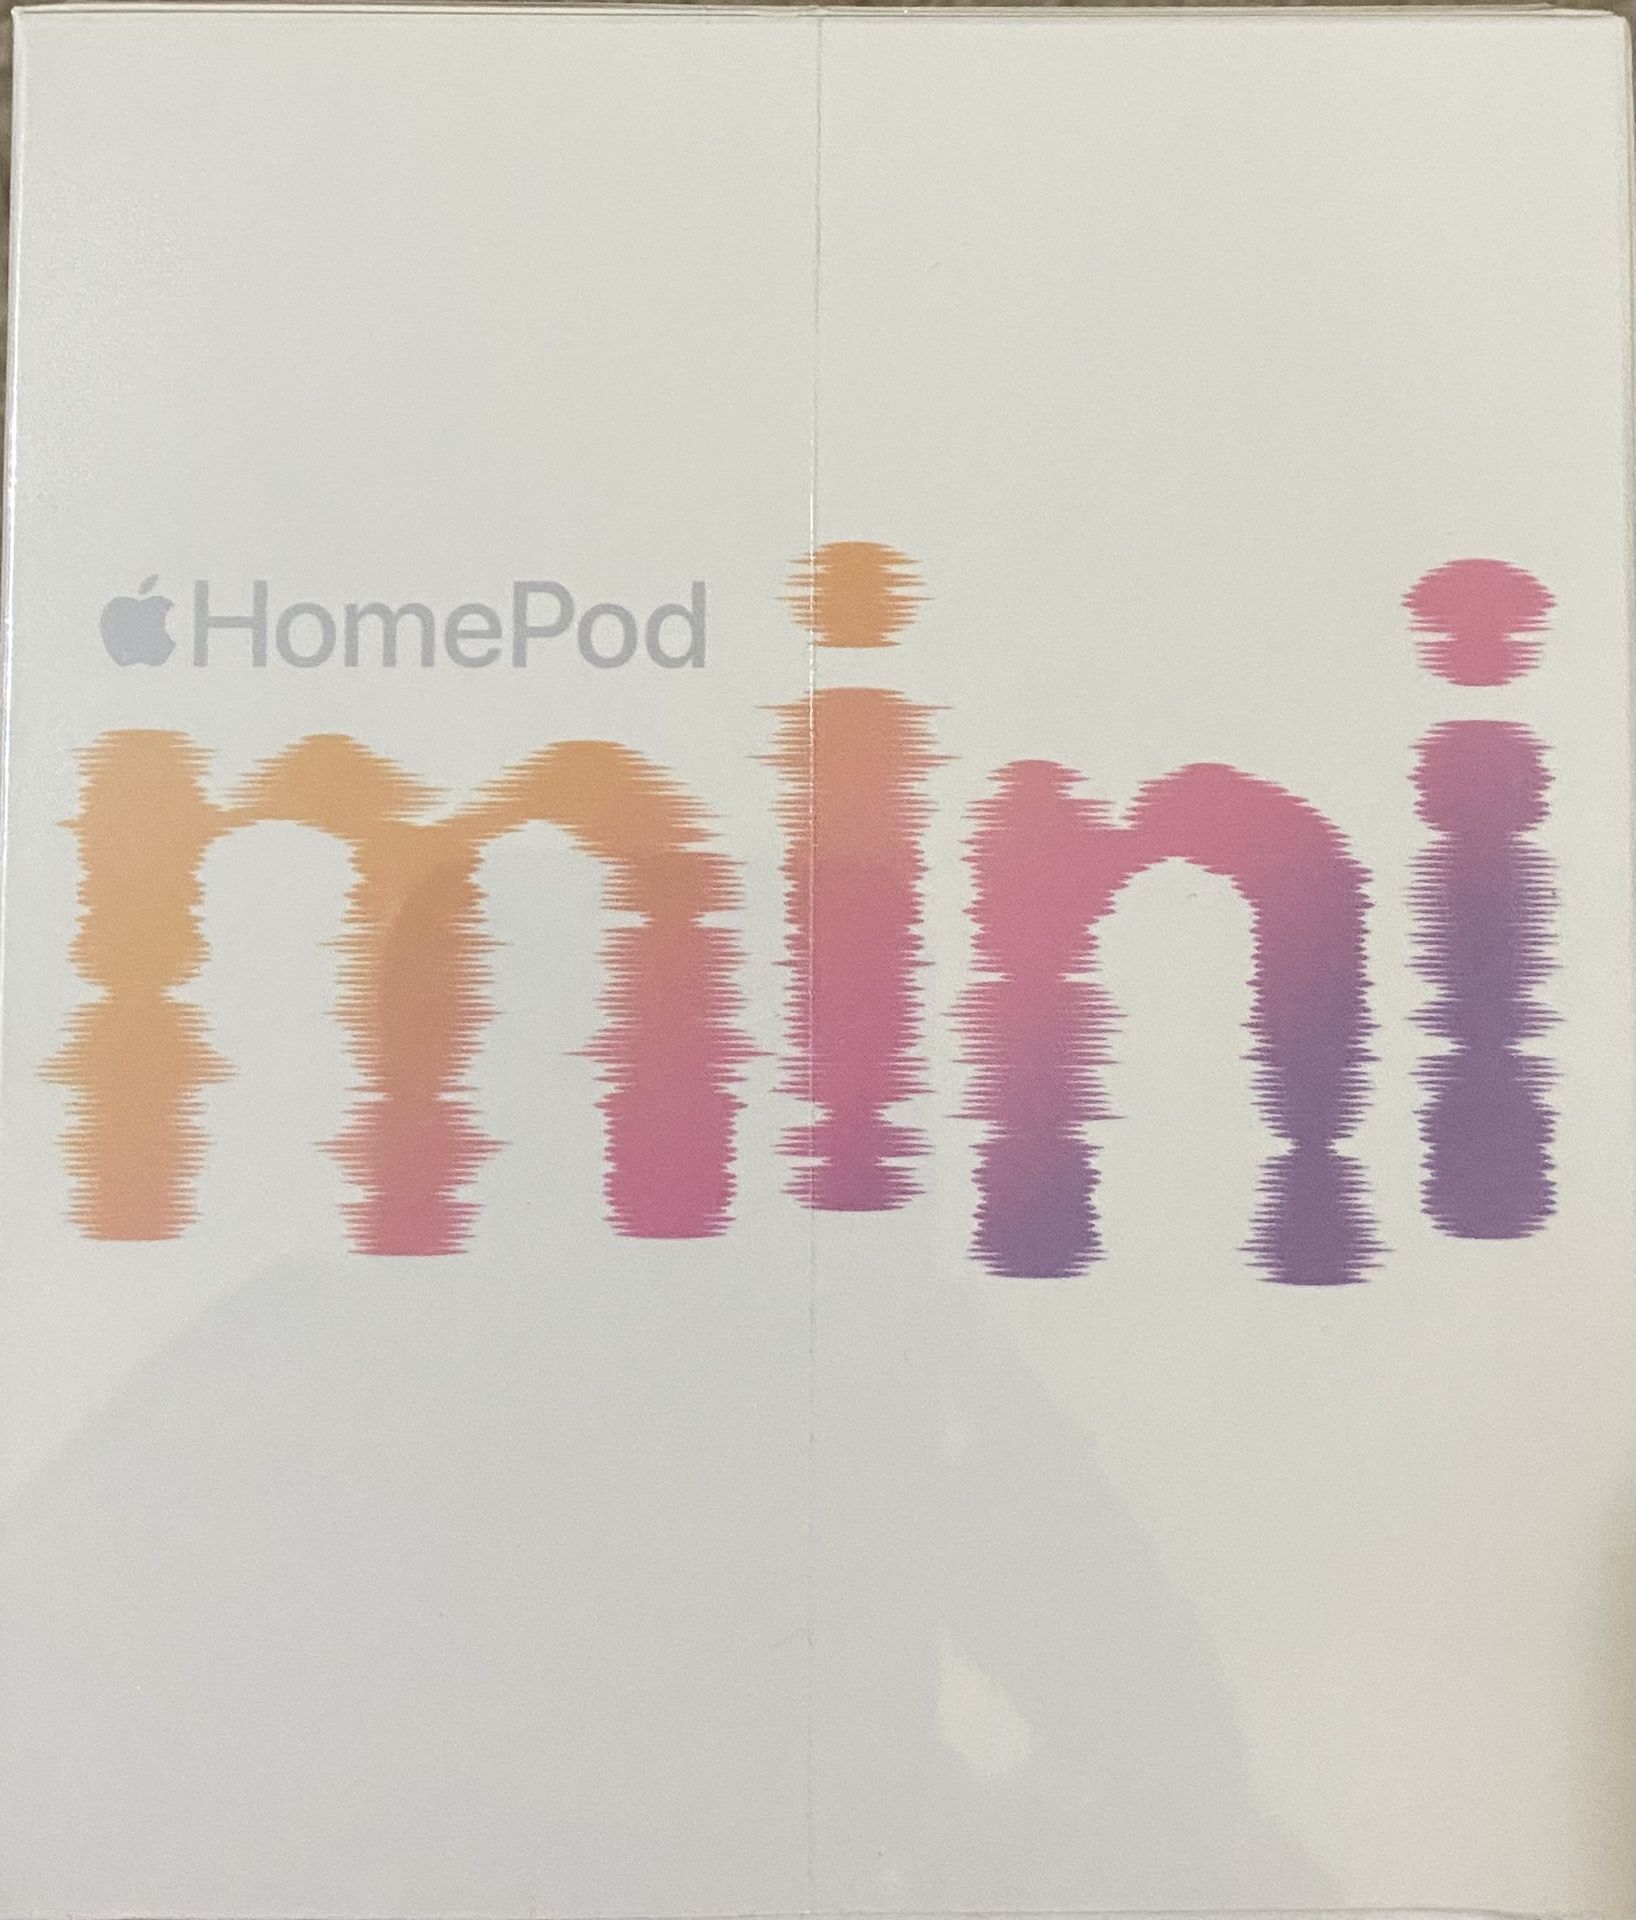 Apple HomePod Mini Home Assistant